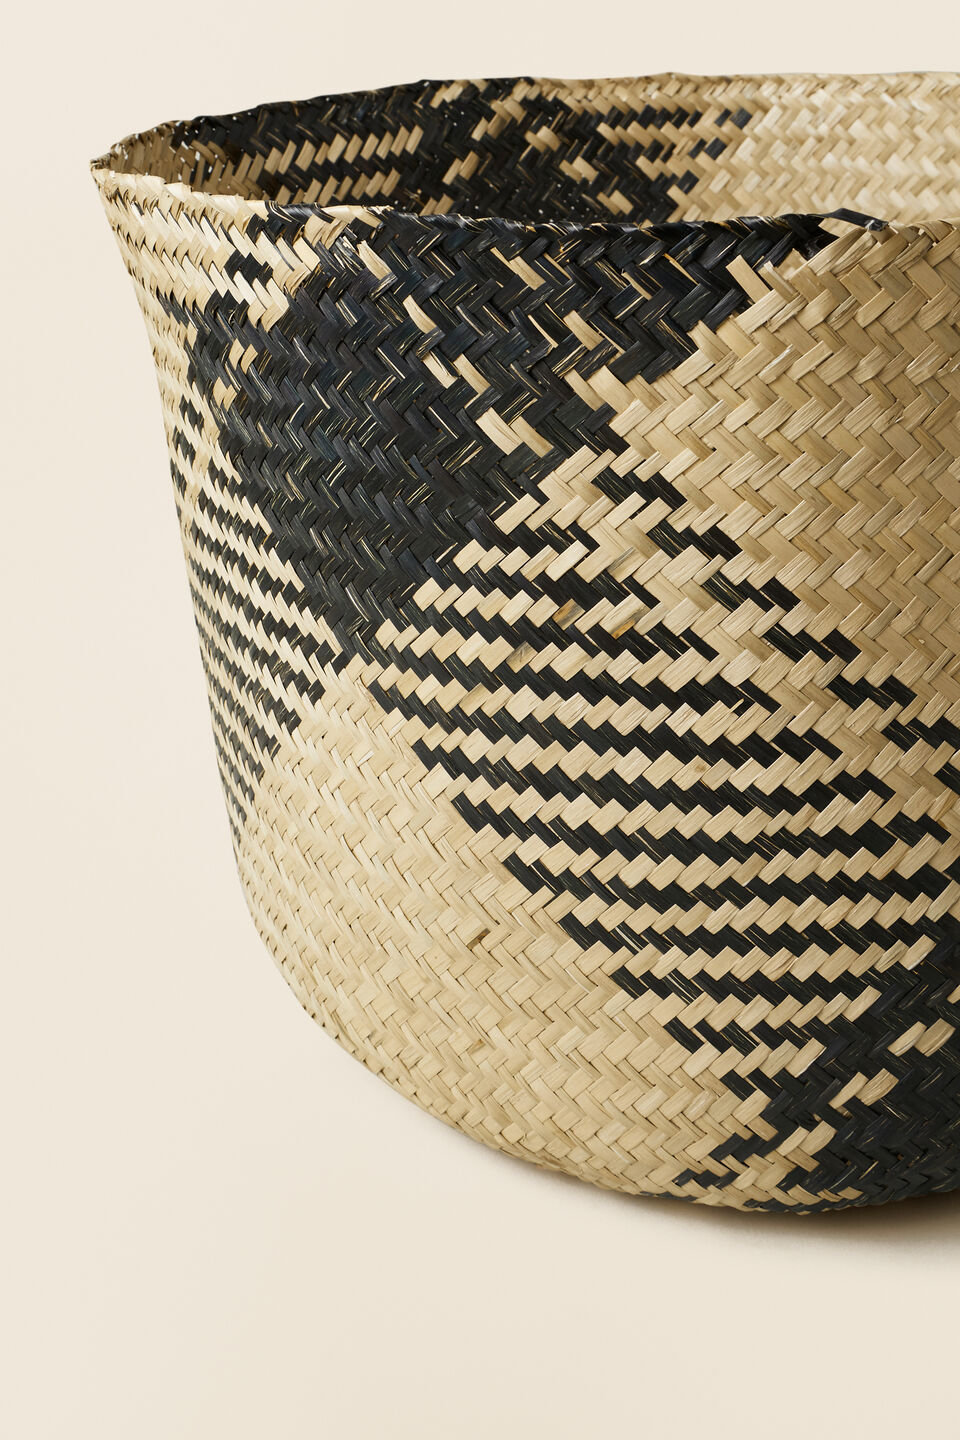 Woven Large Basket  Natural